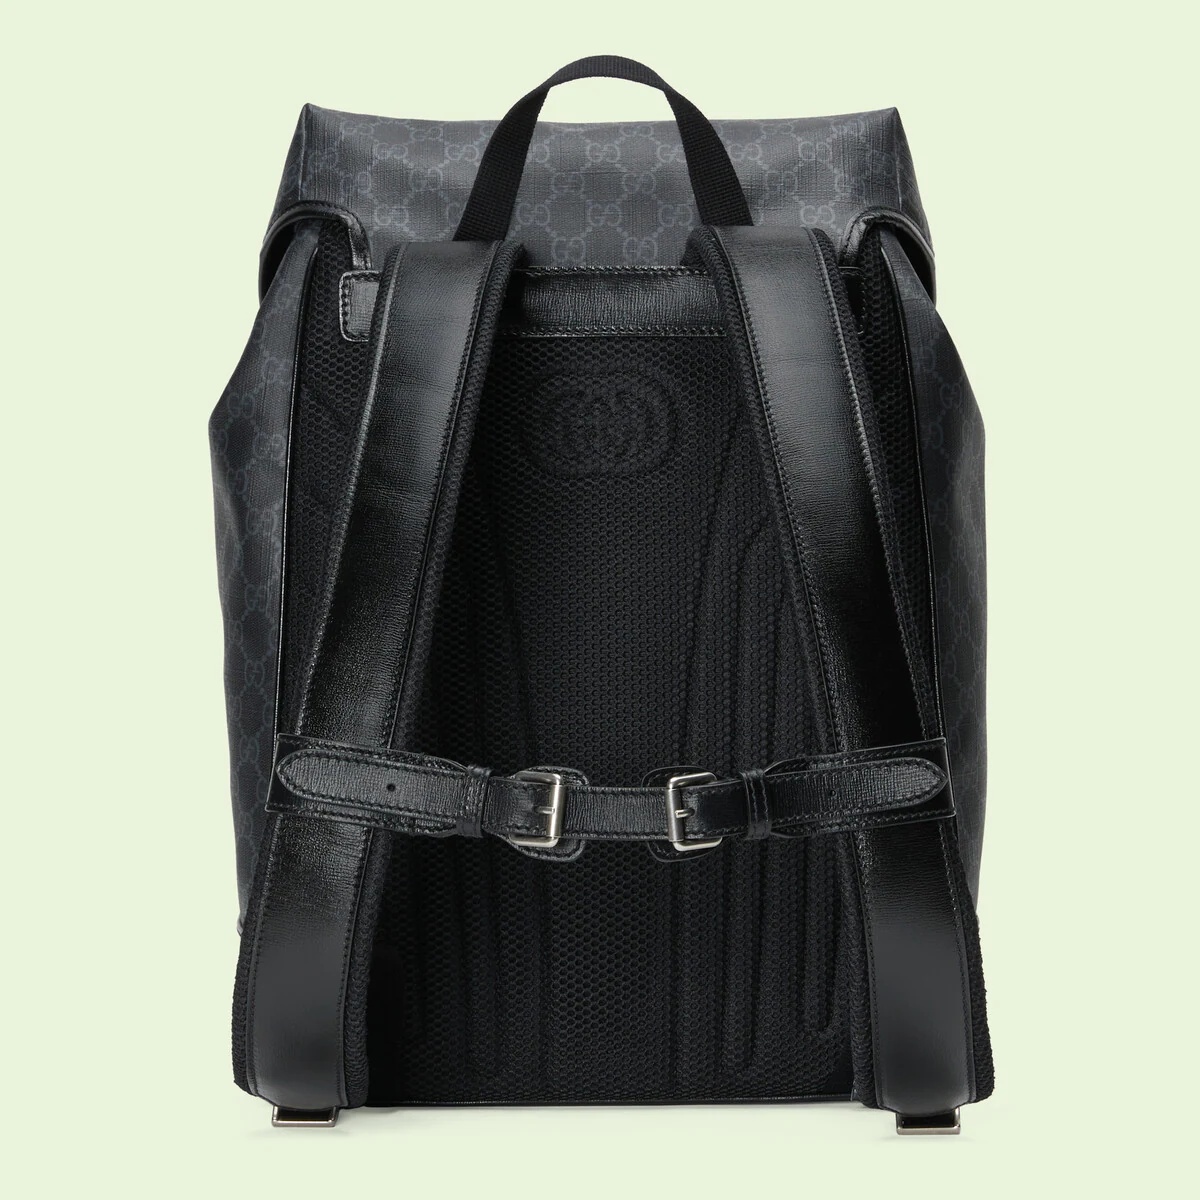 Medium backpack with Interlocking G - 4